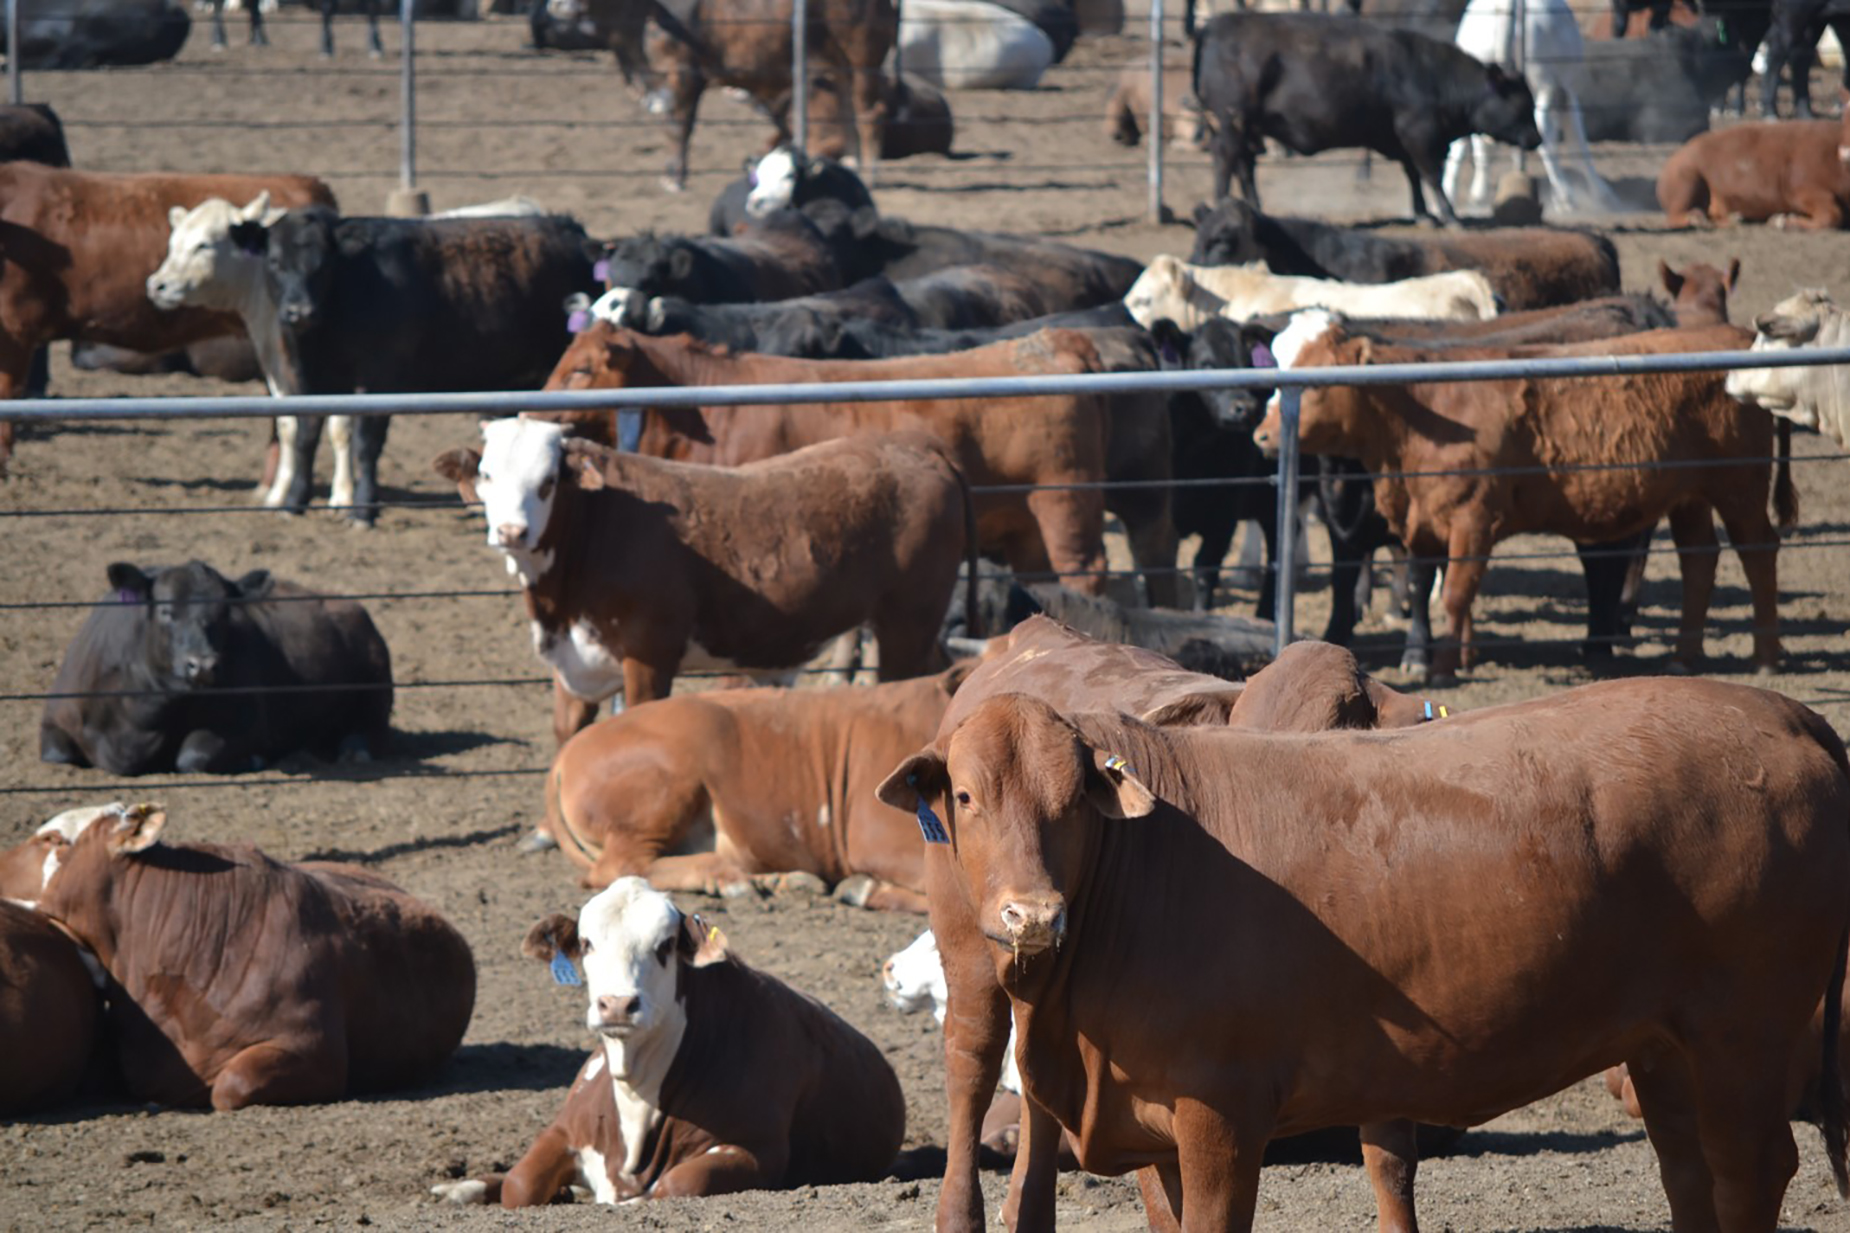 Comprehensive report on U.S. cattle market published for Congress, USDA